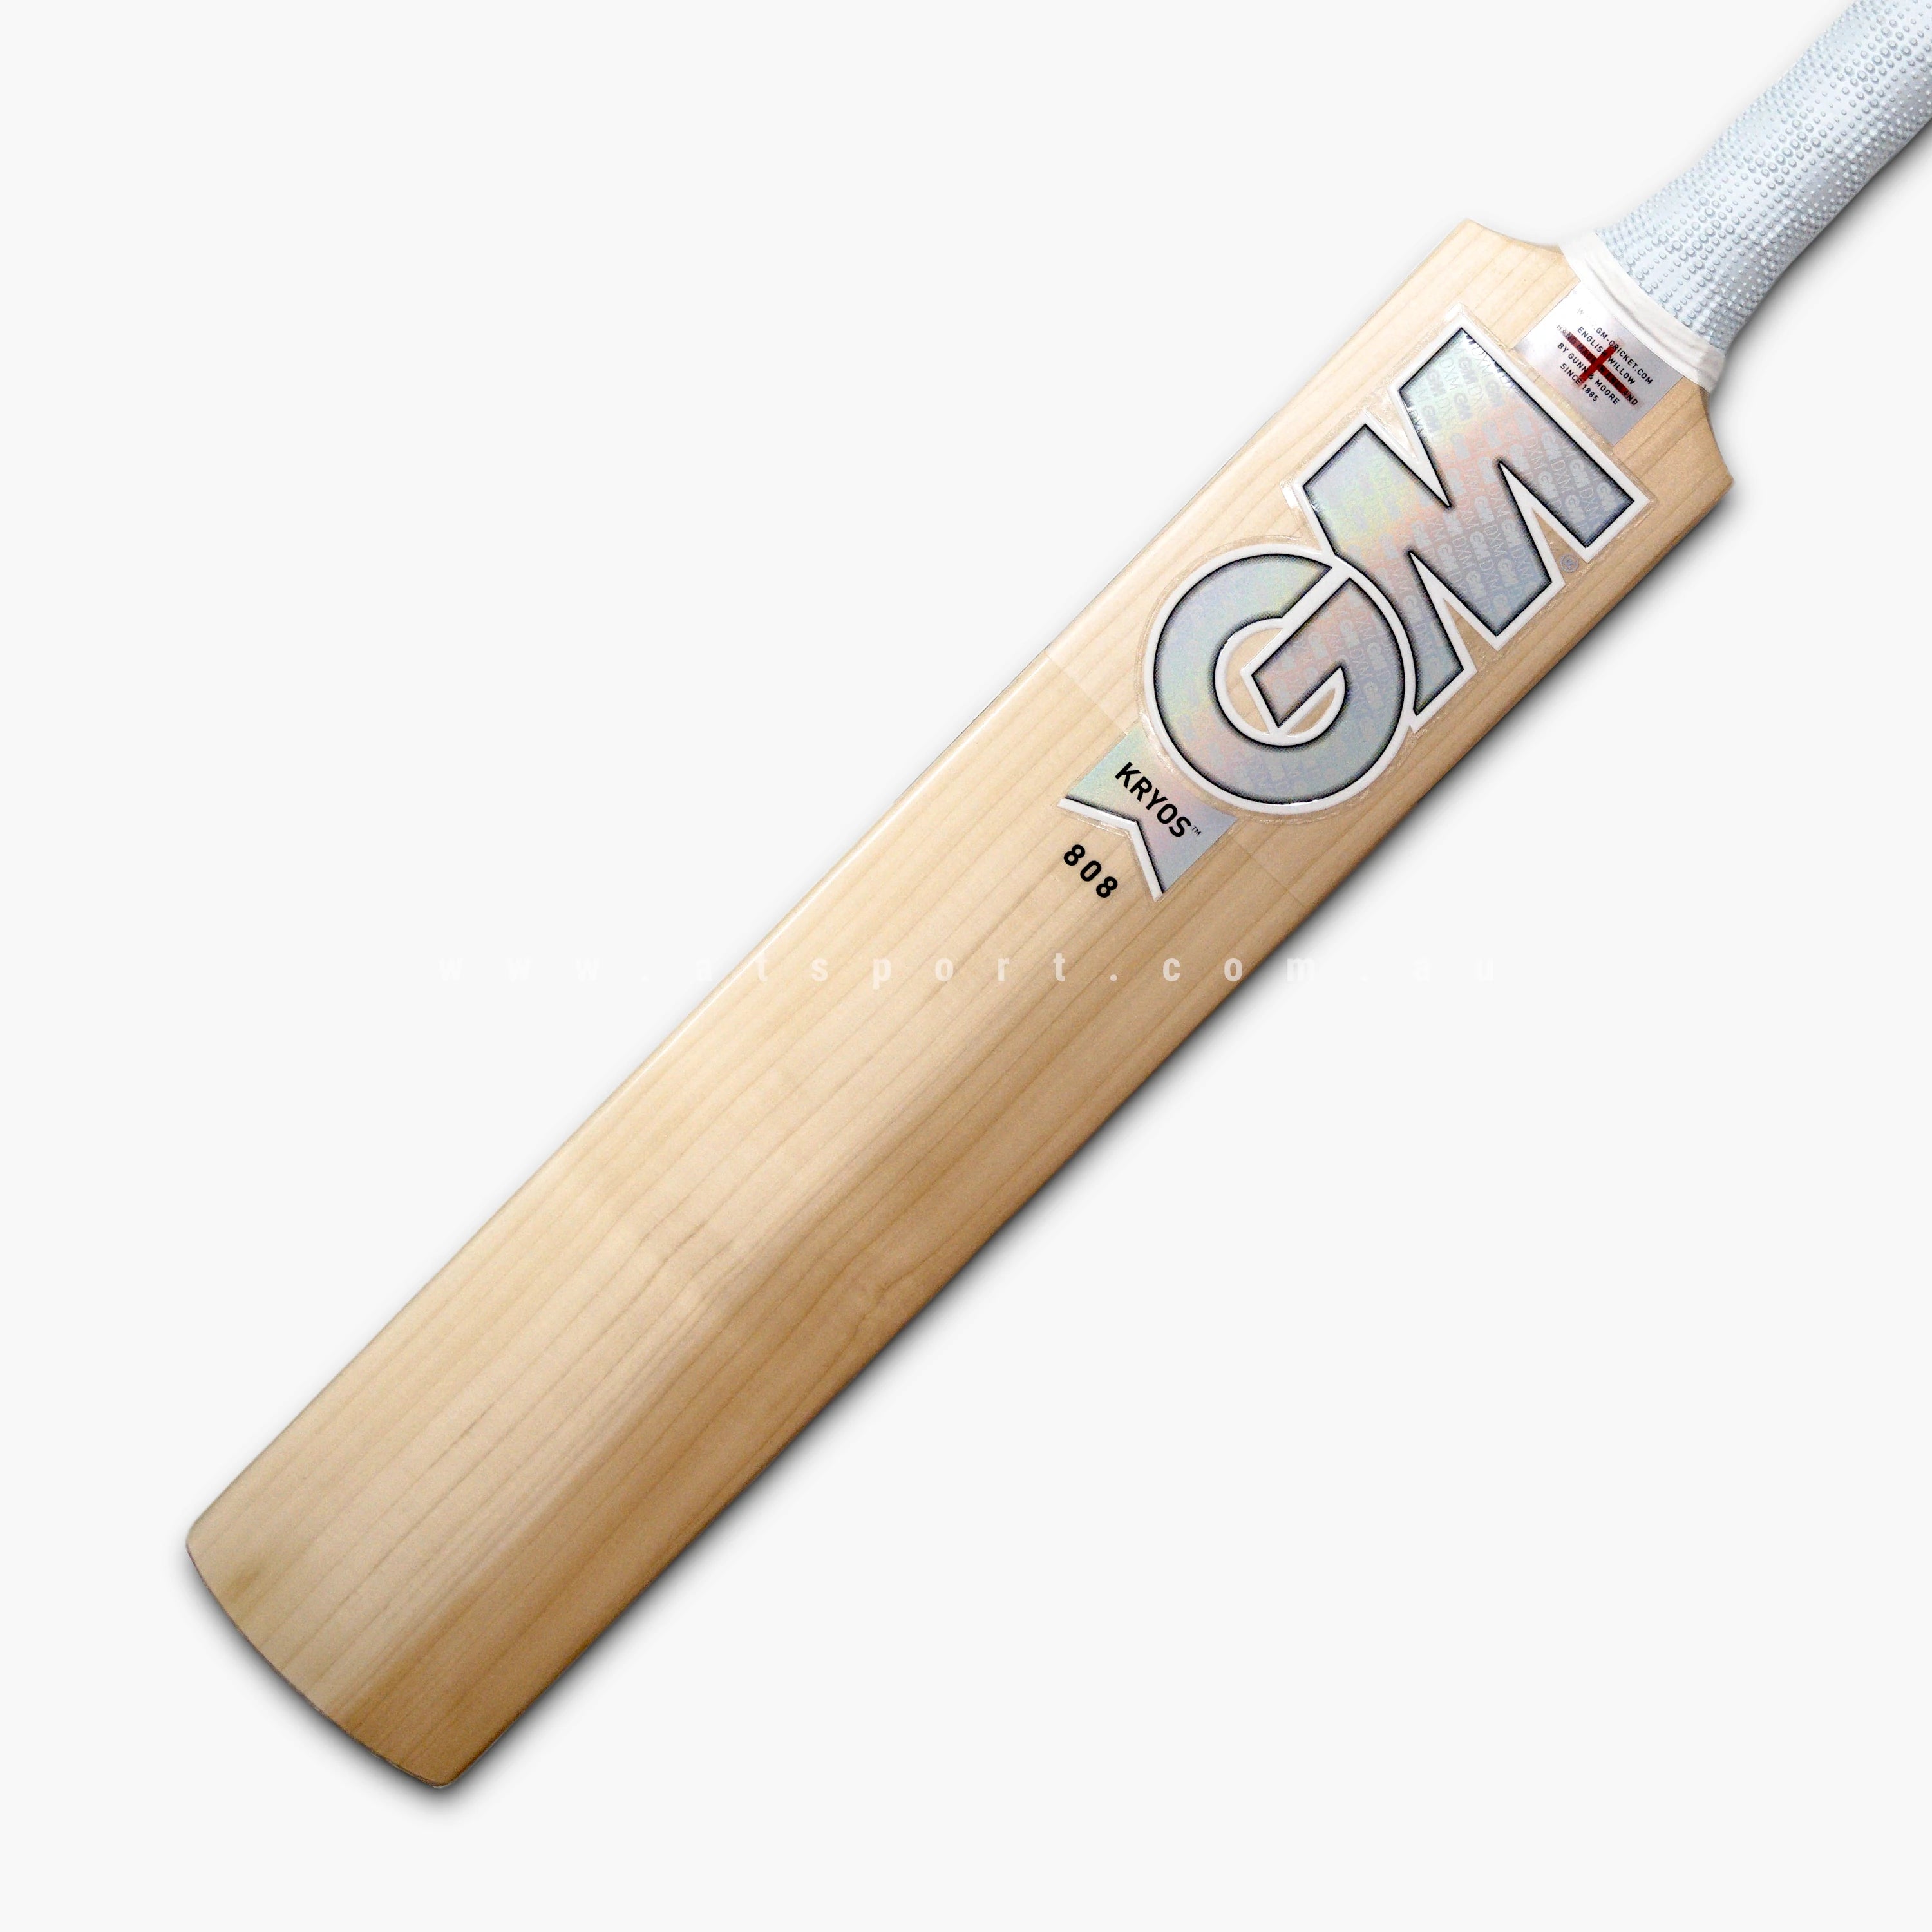 GM Kryos 808 DXM TTNOW L540 English Willow Cricket Bat - SH